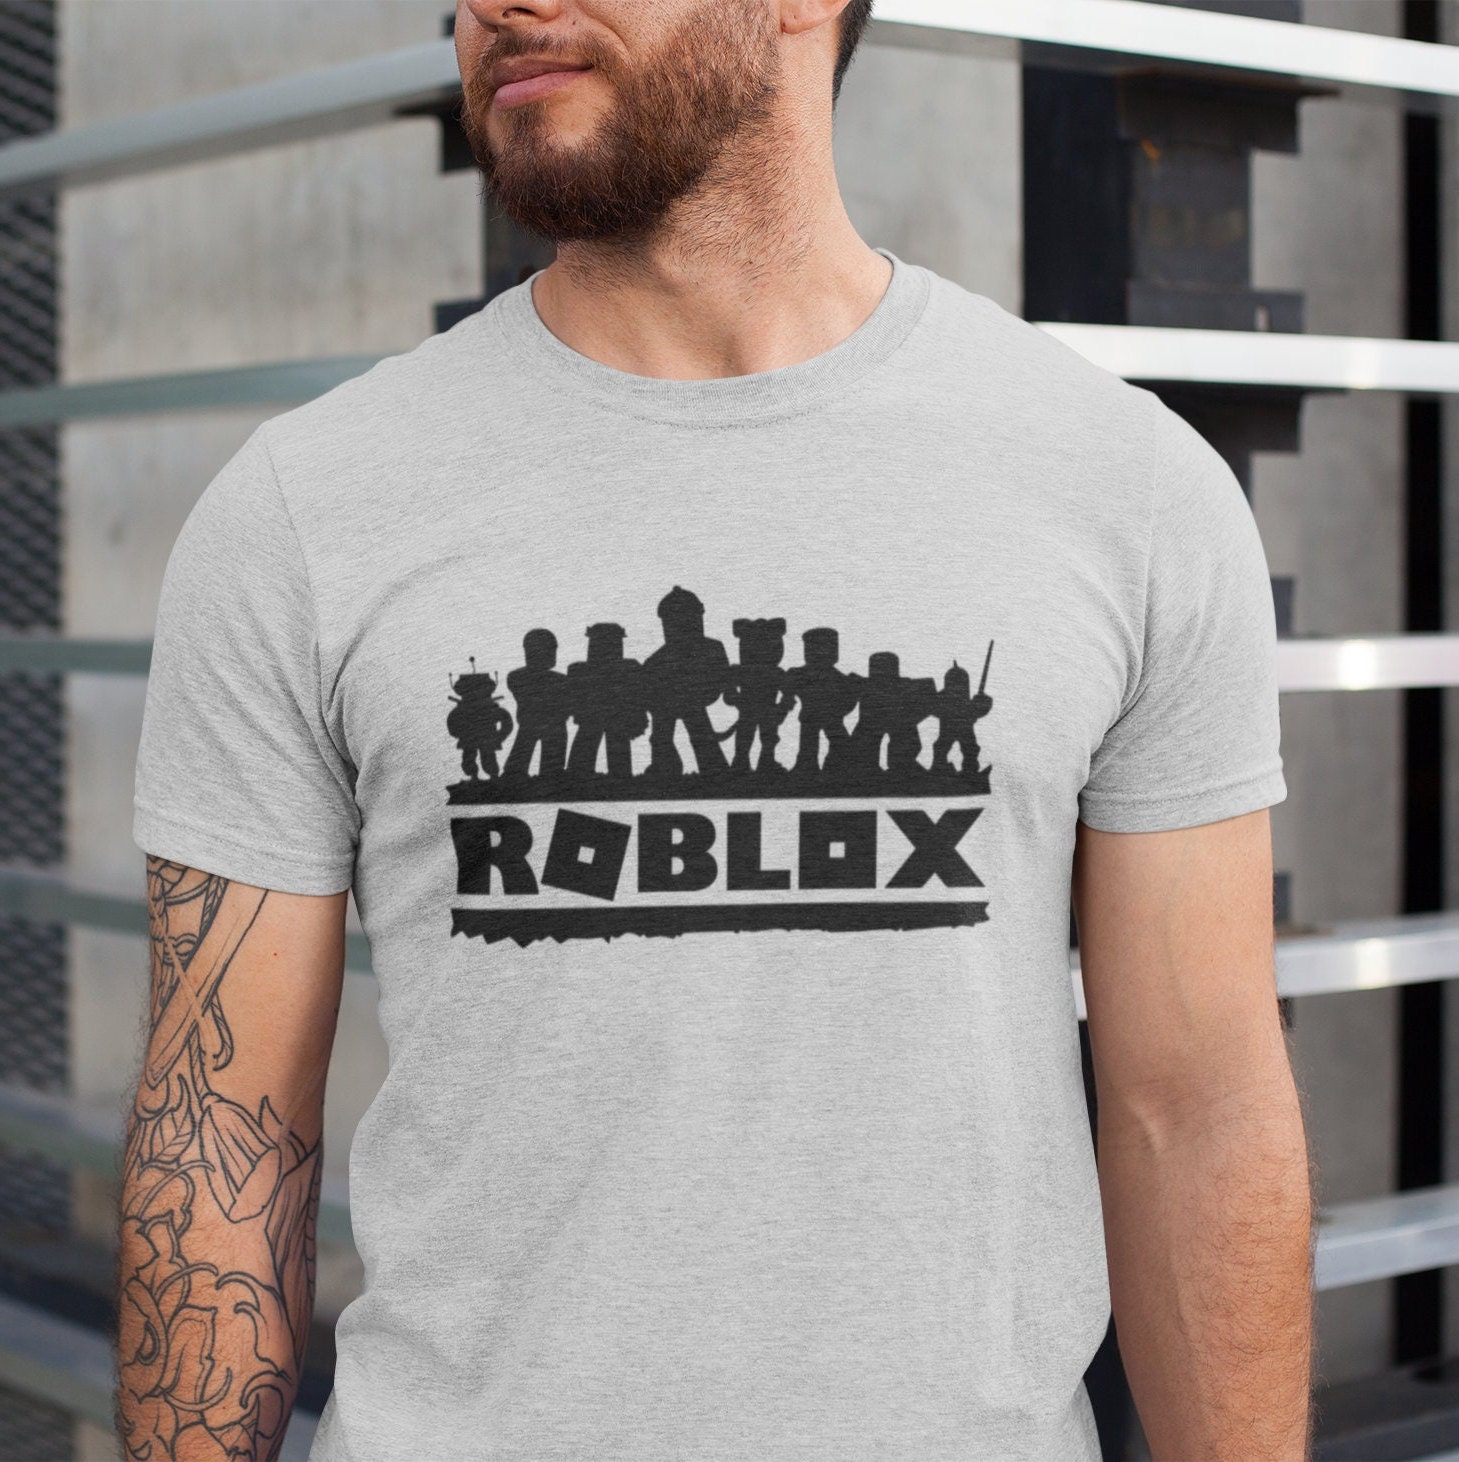 57 Roblox shirt ideas  roblox shirt, roblox, roblox t shirts